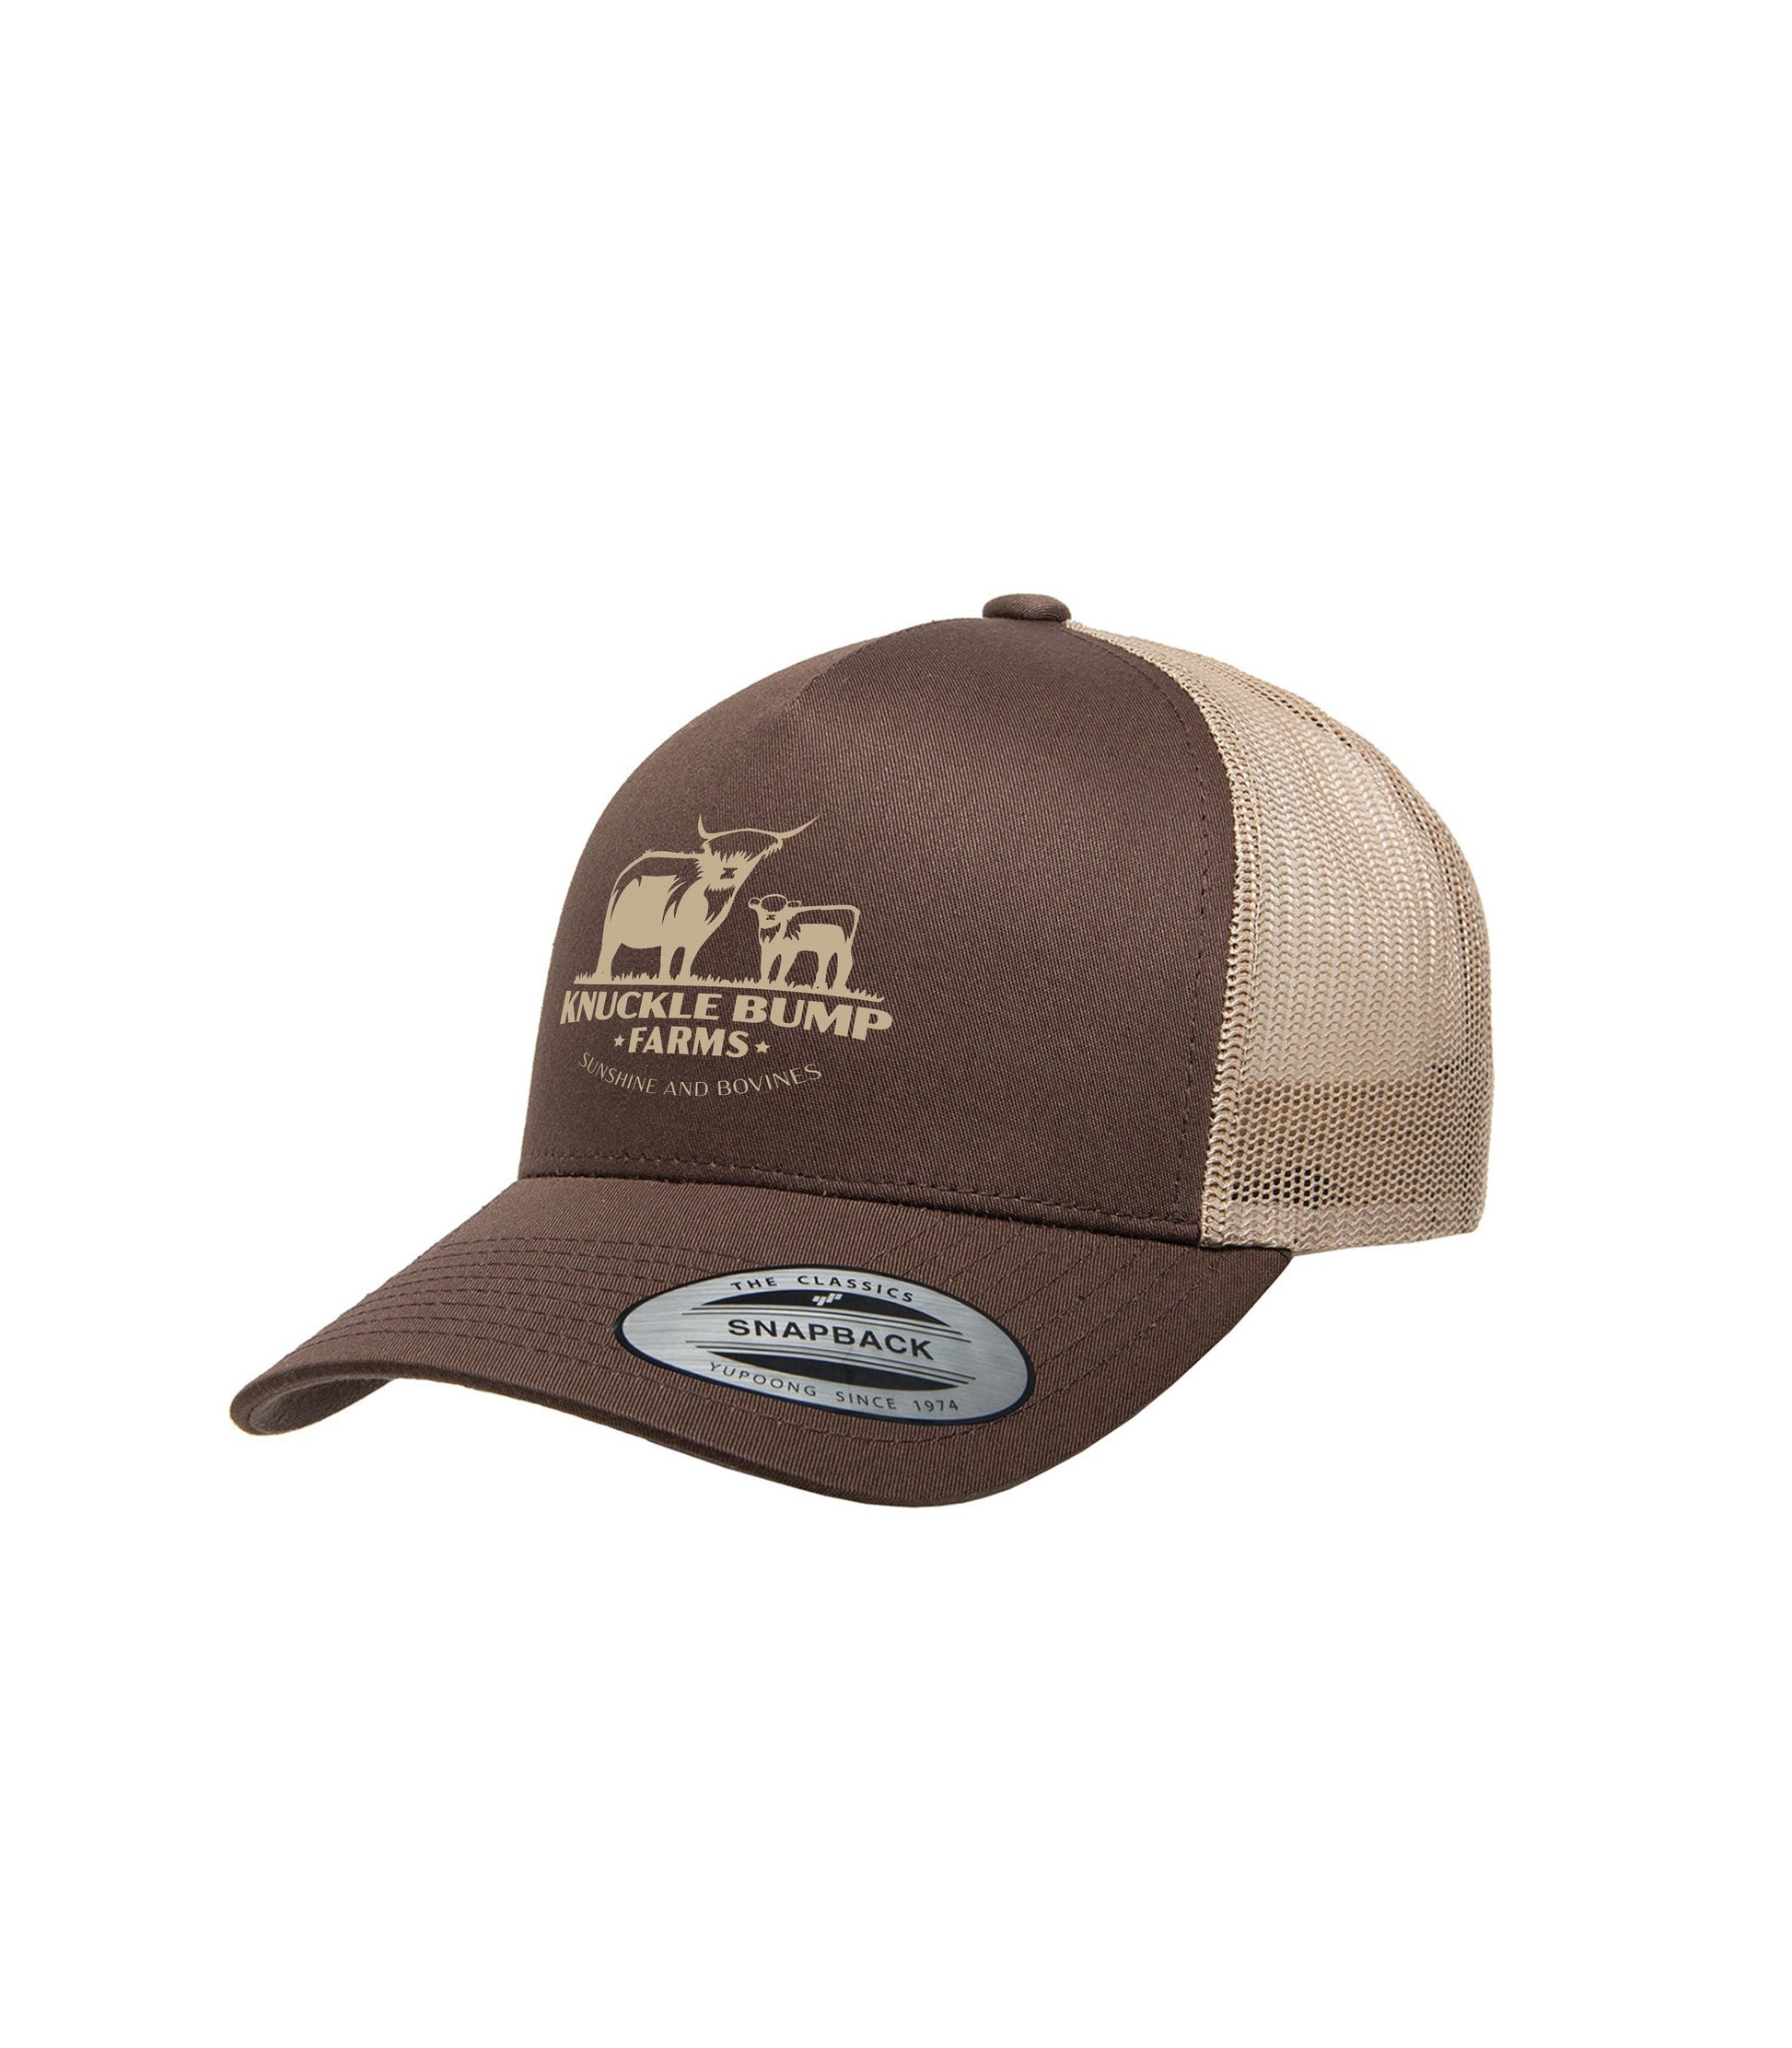 KH Knuckle Bump Farms Trucker Hat